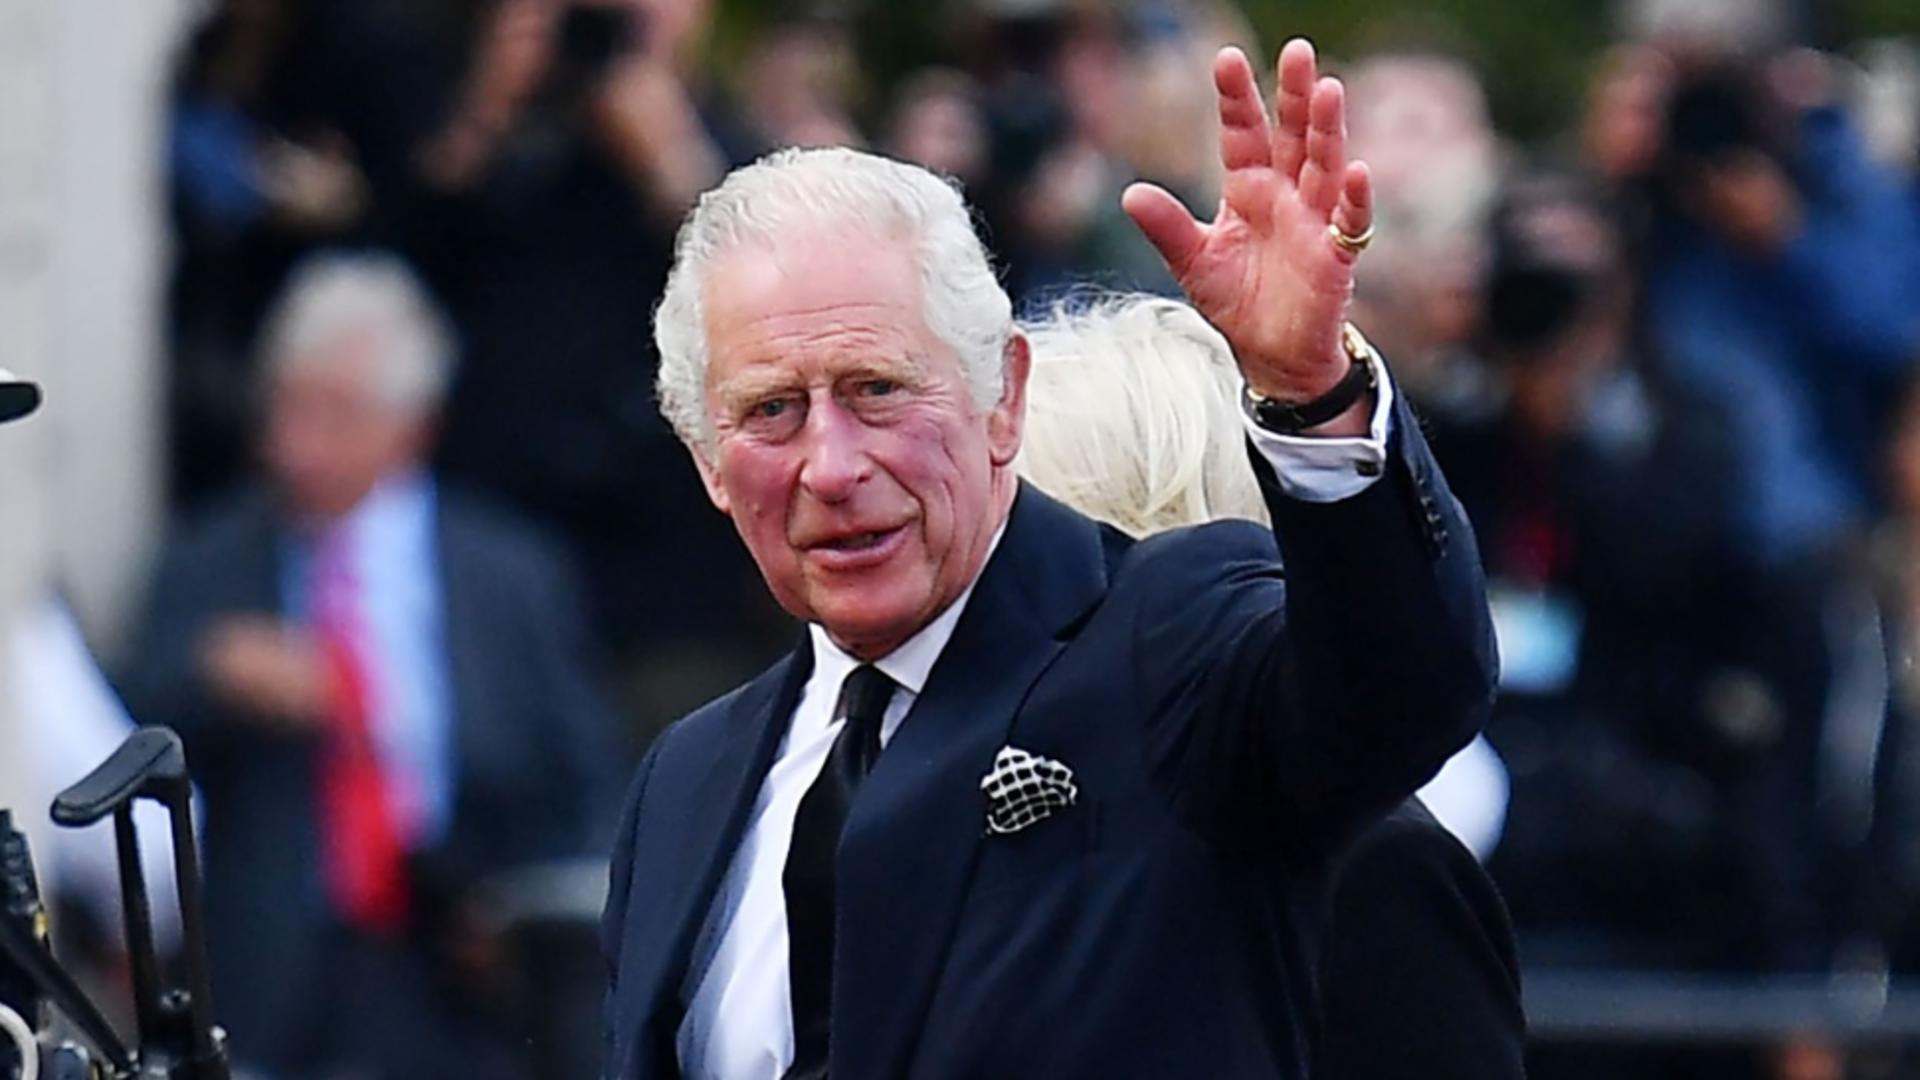 Regele Charles al III-lea la Palatul Buckingham Foto: Profi Media